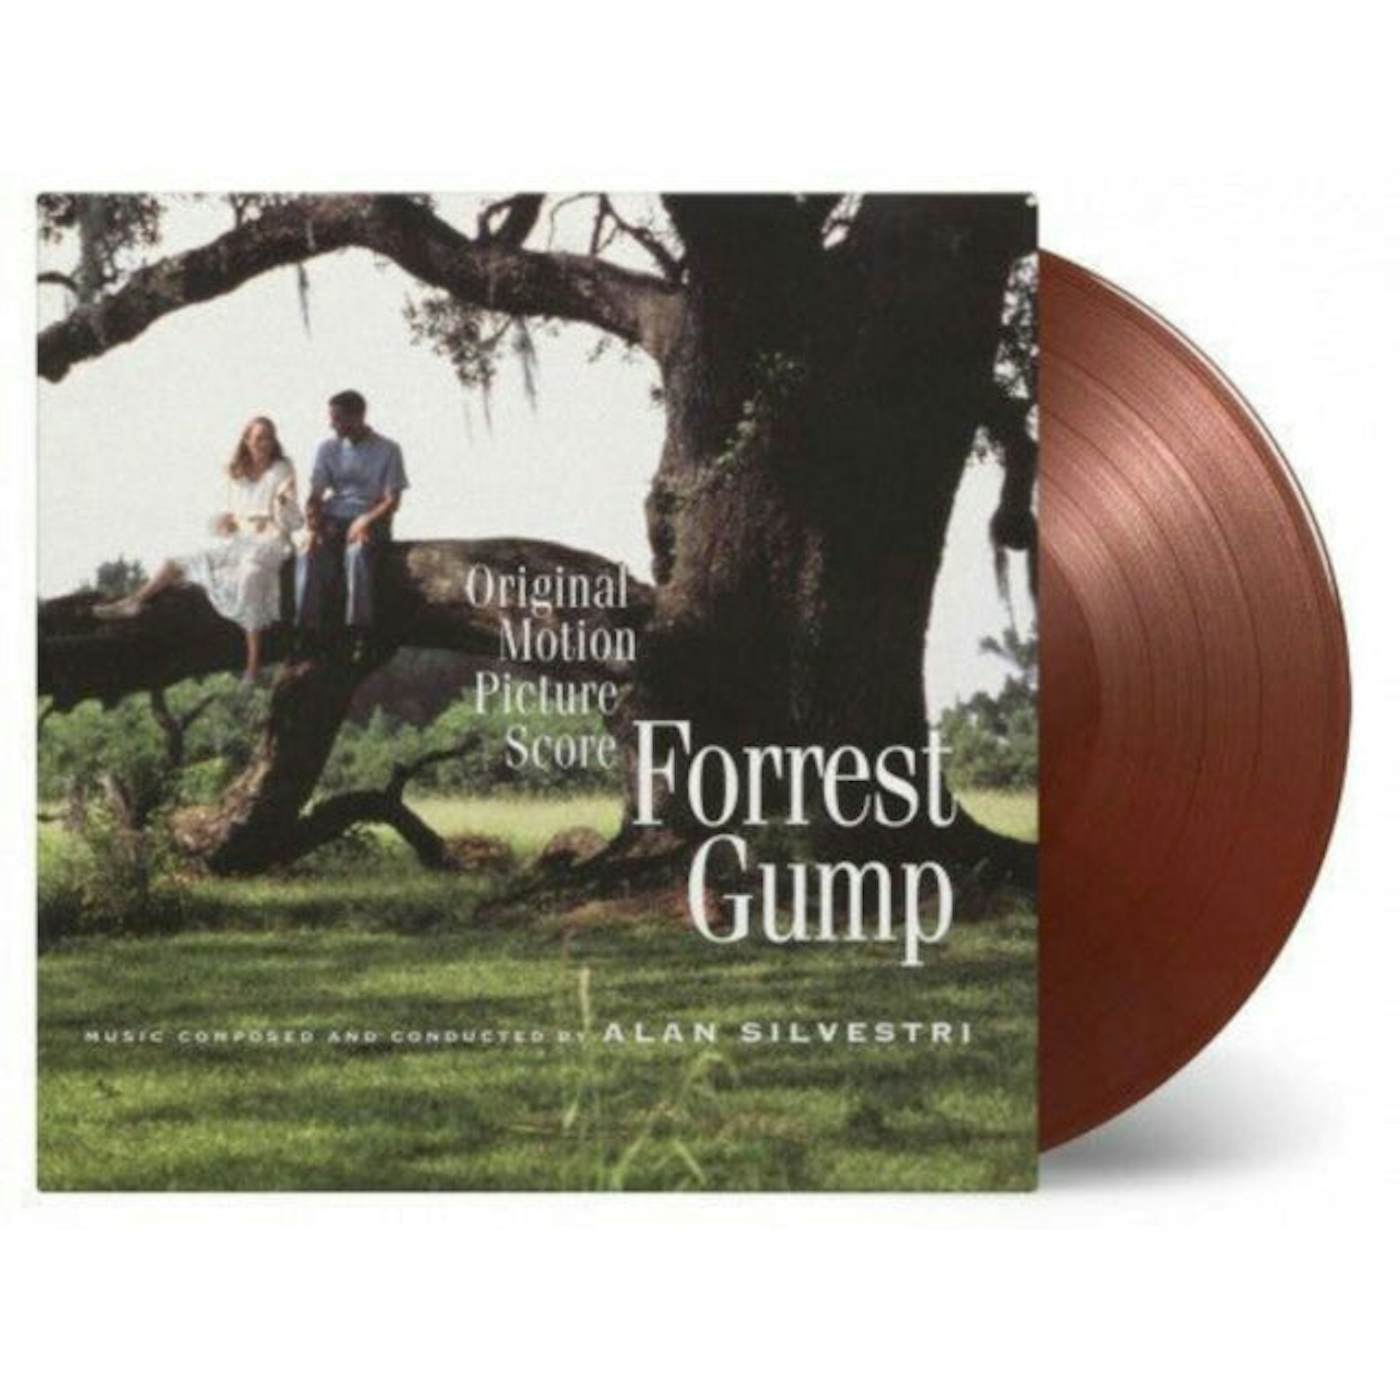 Alan Silvestri LP Vinyl Record  Forrest Gump  Original Soundtrack